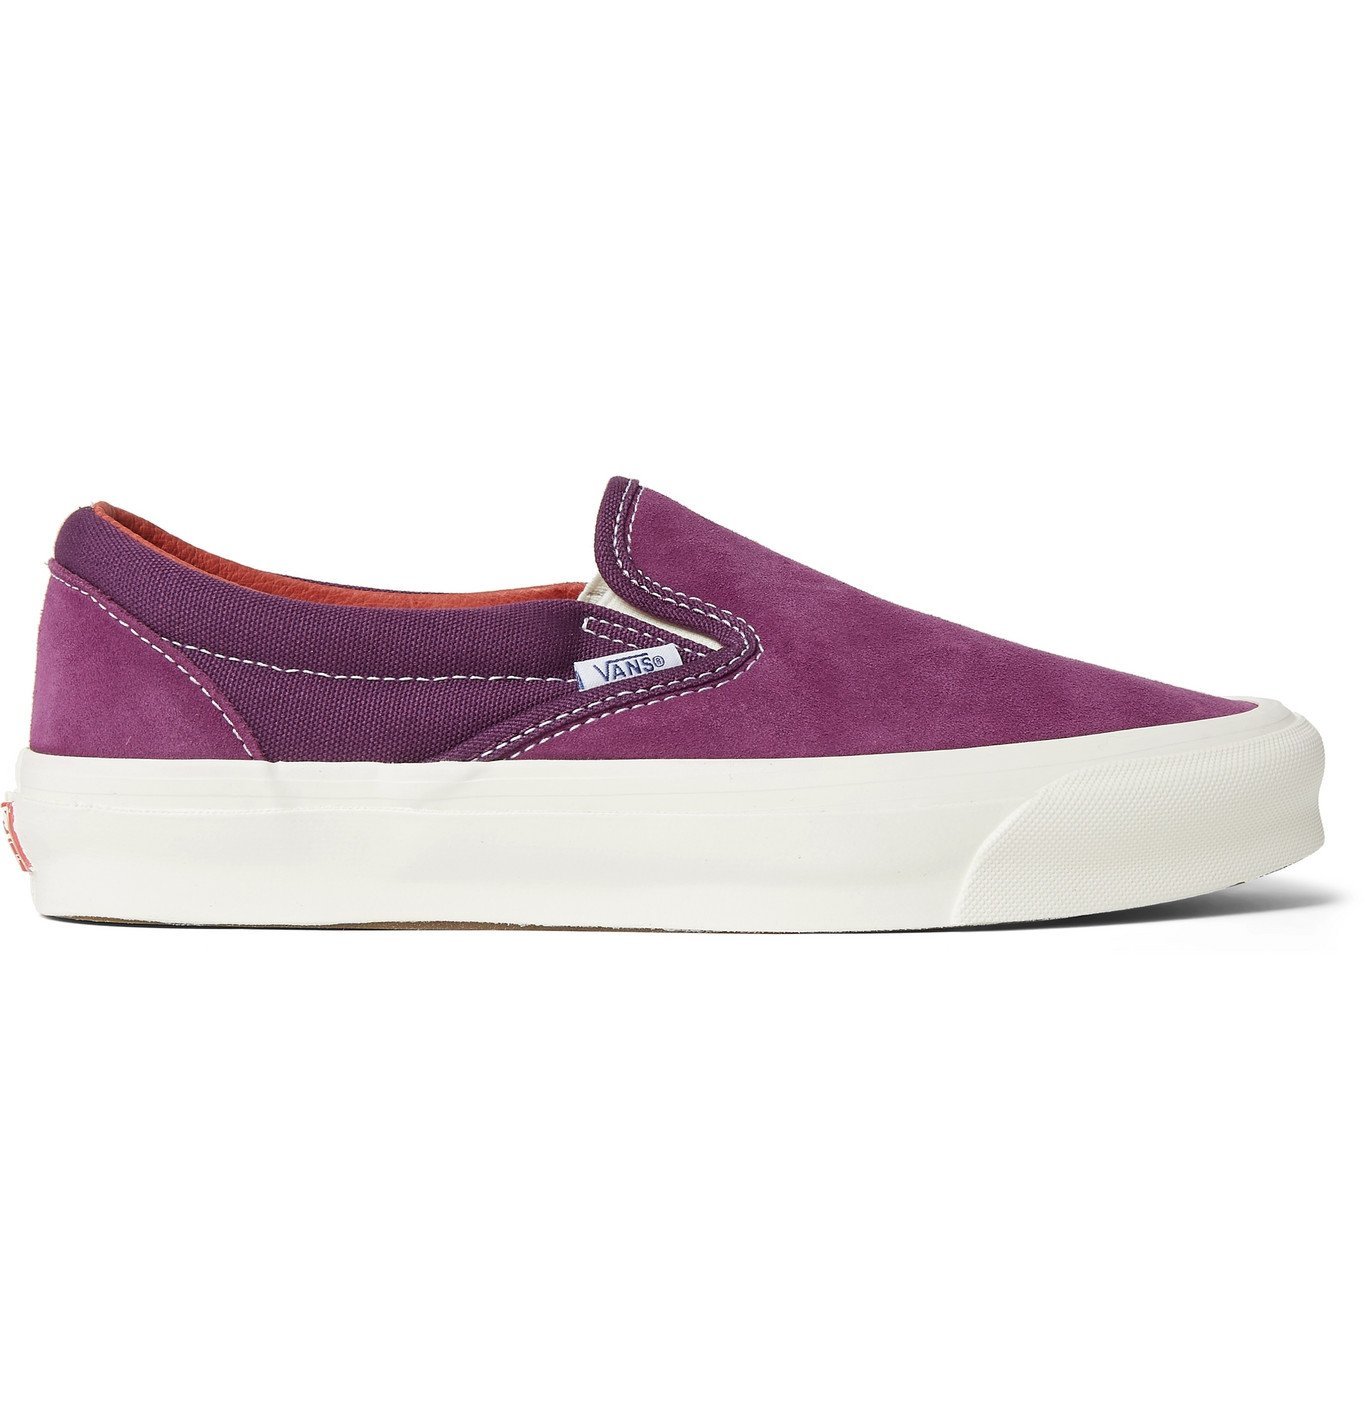 Vans - OG Classic LX Suede and Canvas Slip-On Sneakers - Purple Vans